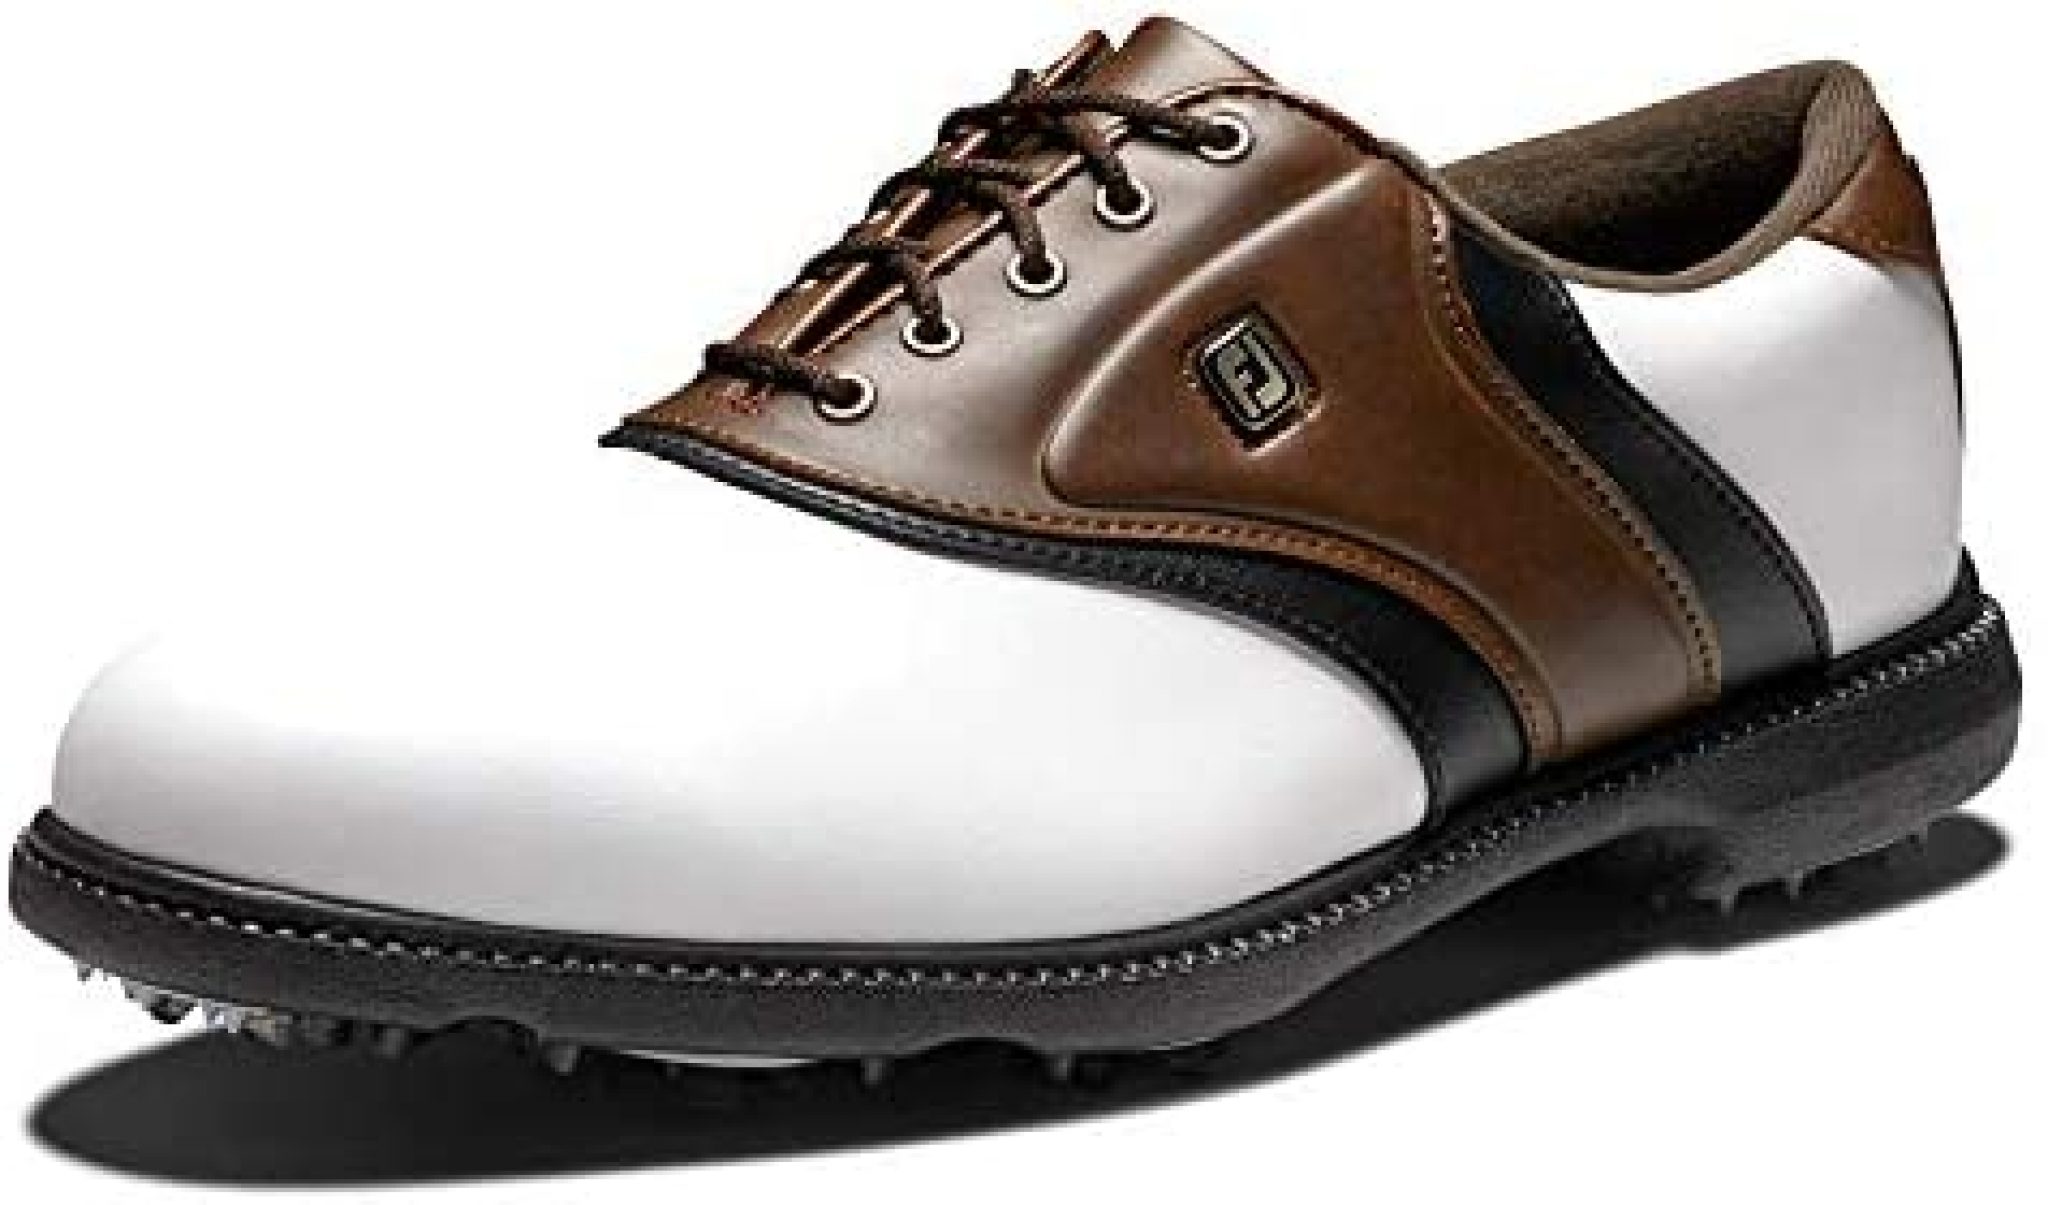 Footjoy Original Golf Shoes - www.inf-inet.com